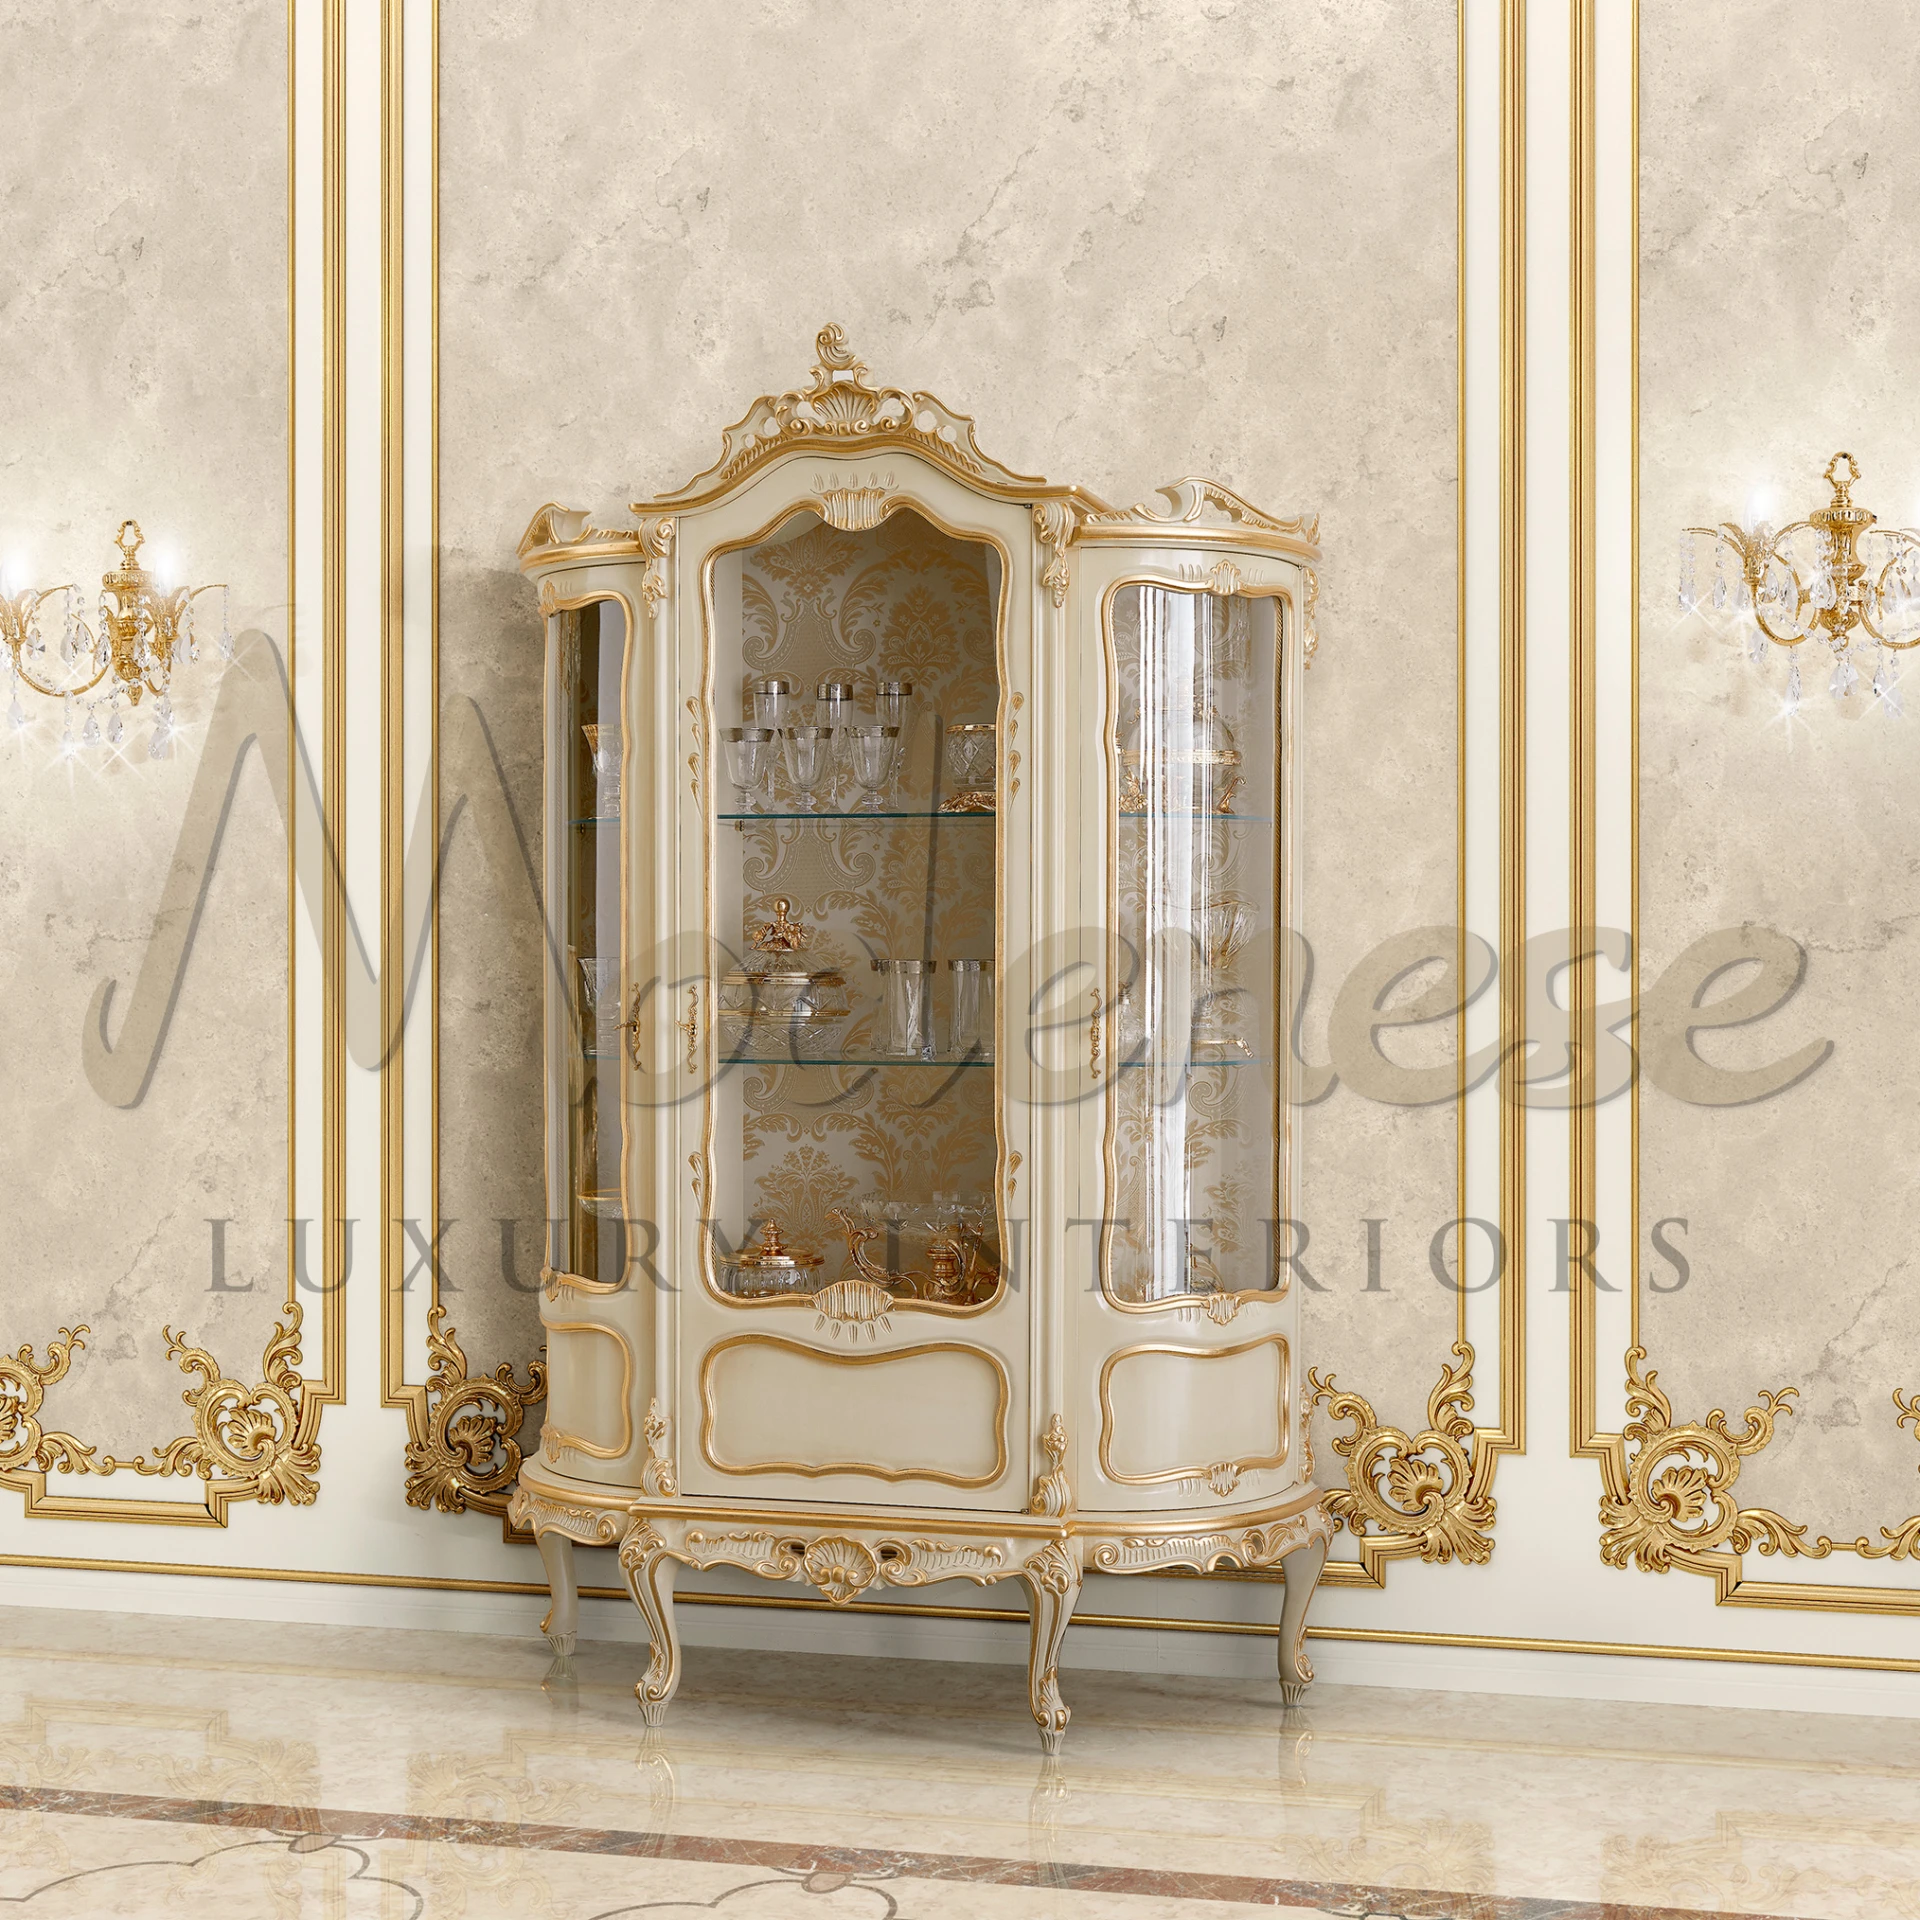 Luxurious walnut design 3-doors glass cabinet against golden decorated wall.